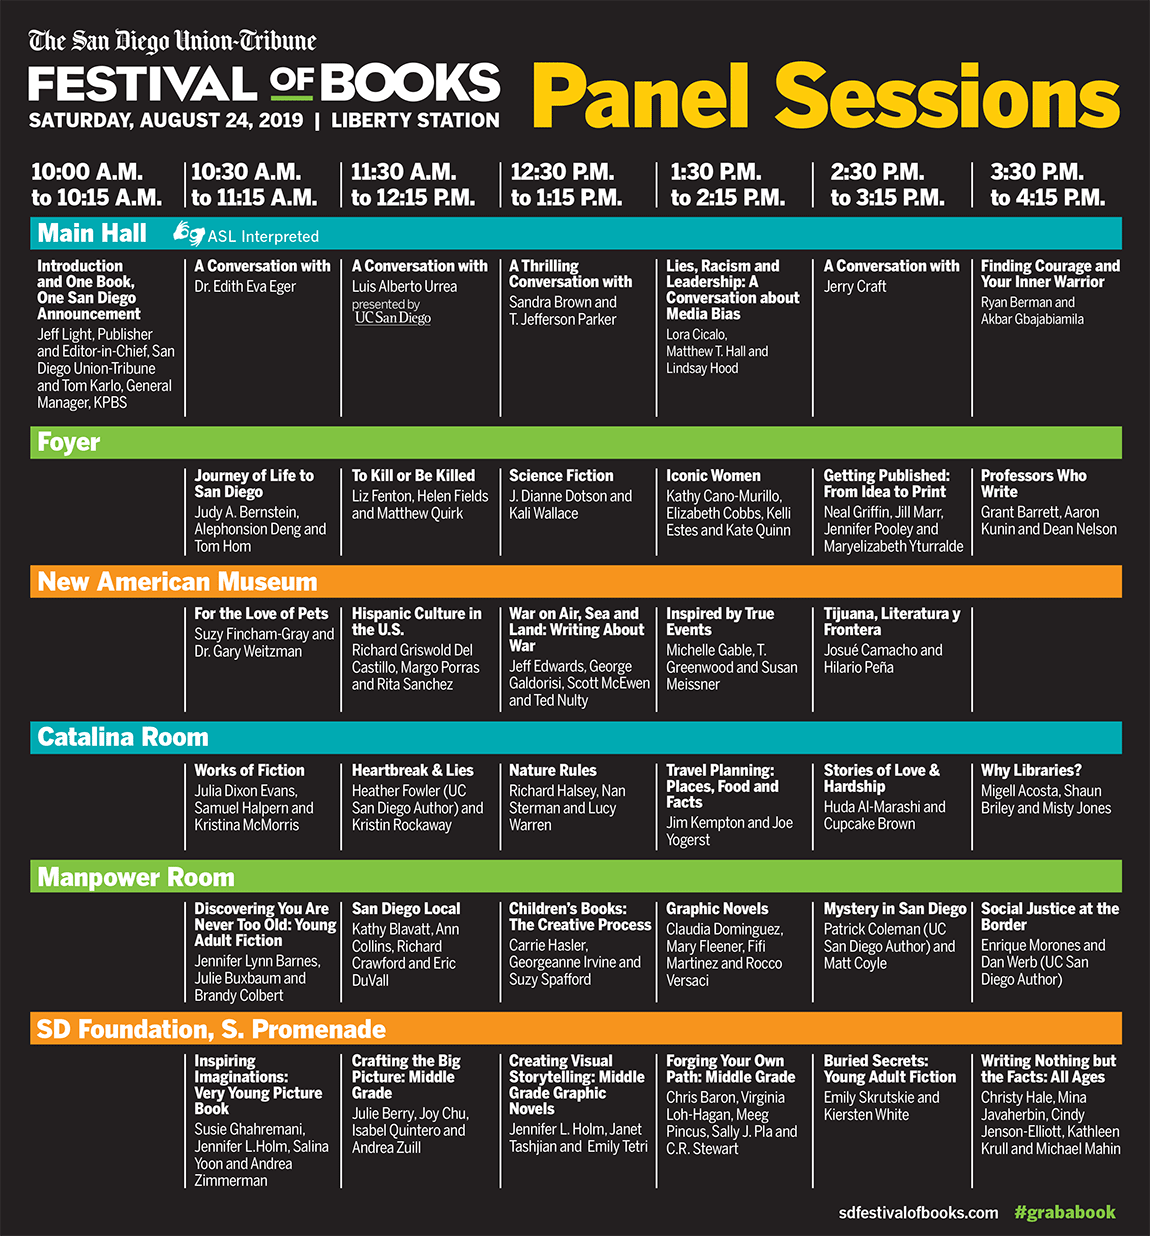 Festival of Books Schedule The San Diego UnionTribune